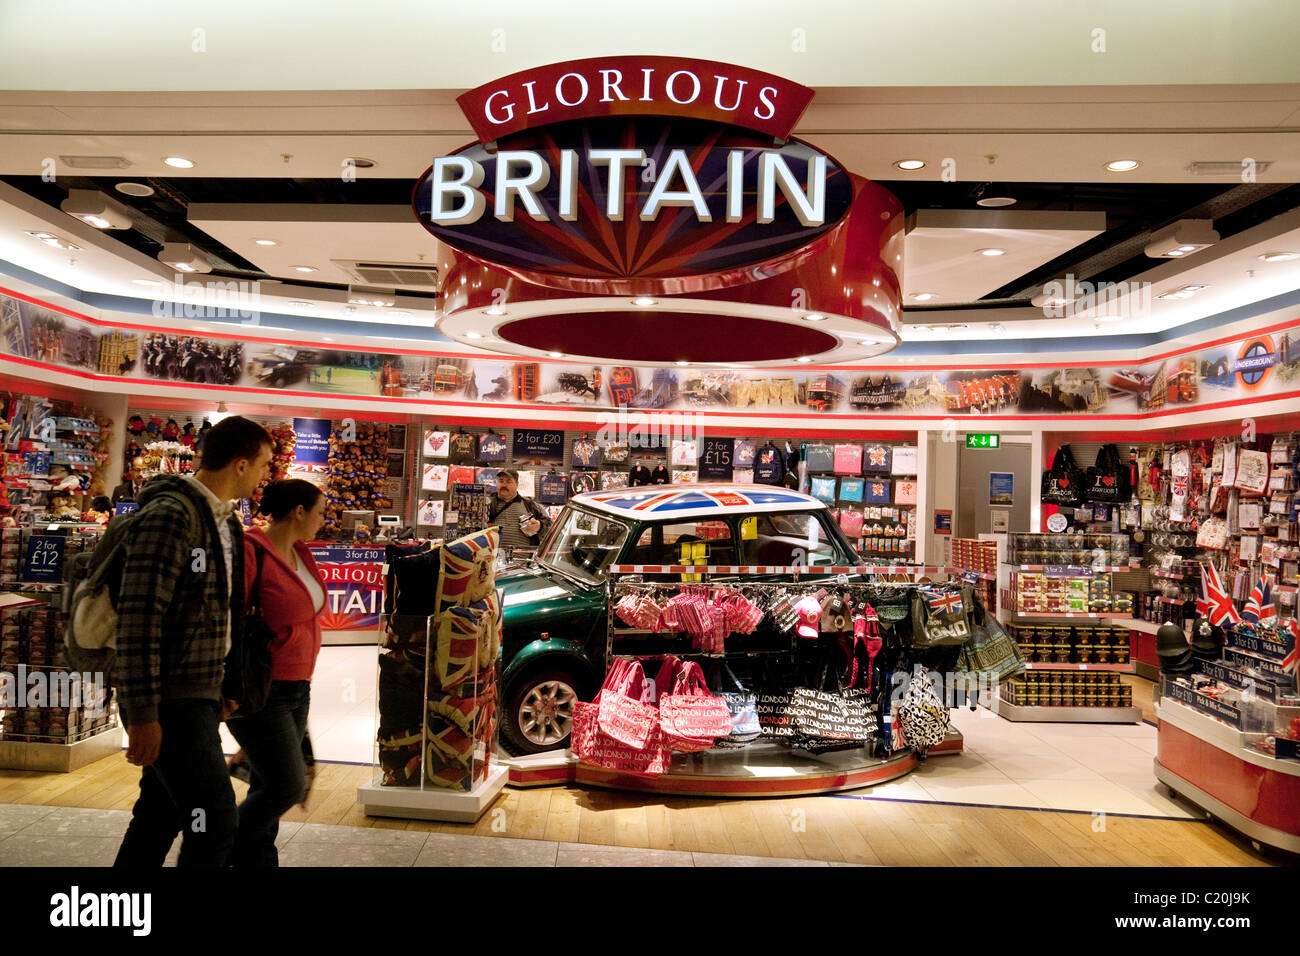 Menschen im "Glorious Britain" Souvenir Shop, Terminal 5 Heathrow Airport  London UK Stockfotografie - Alamy